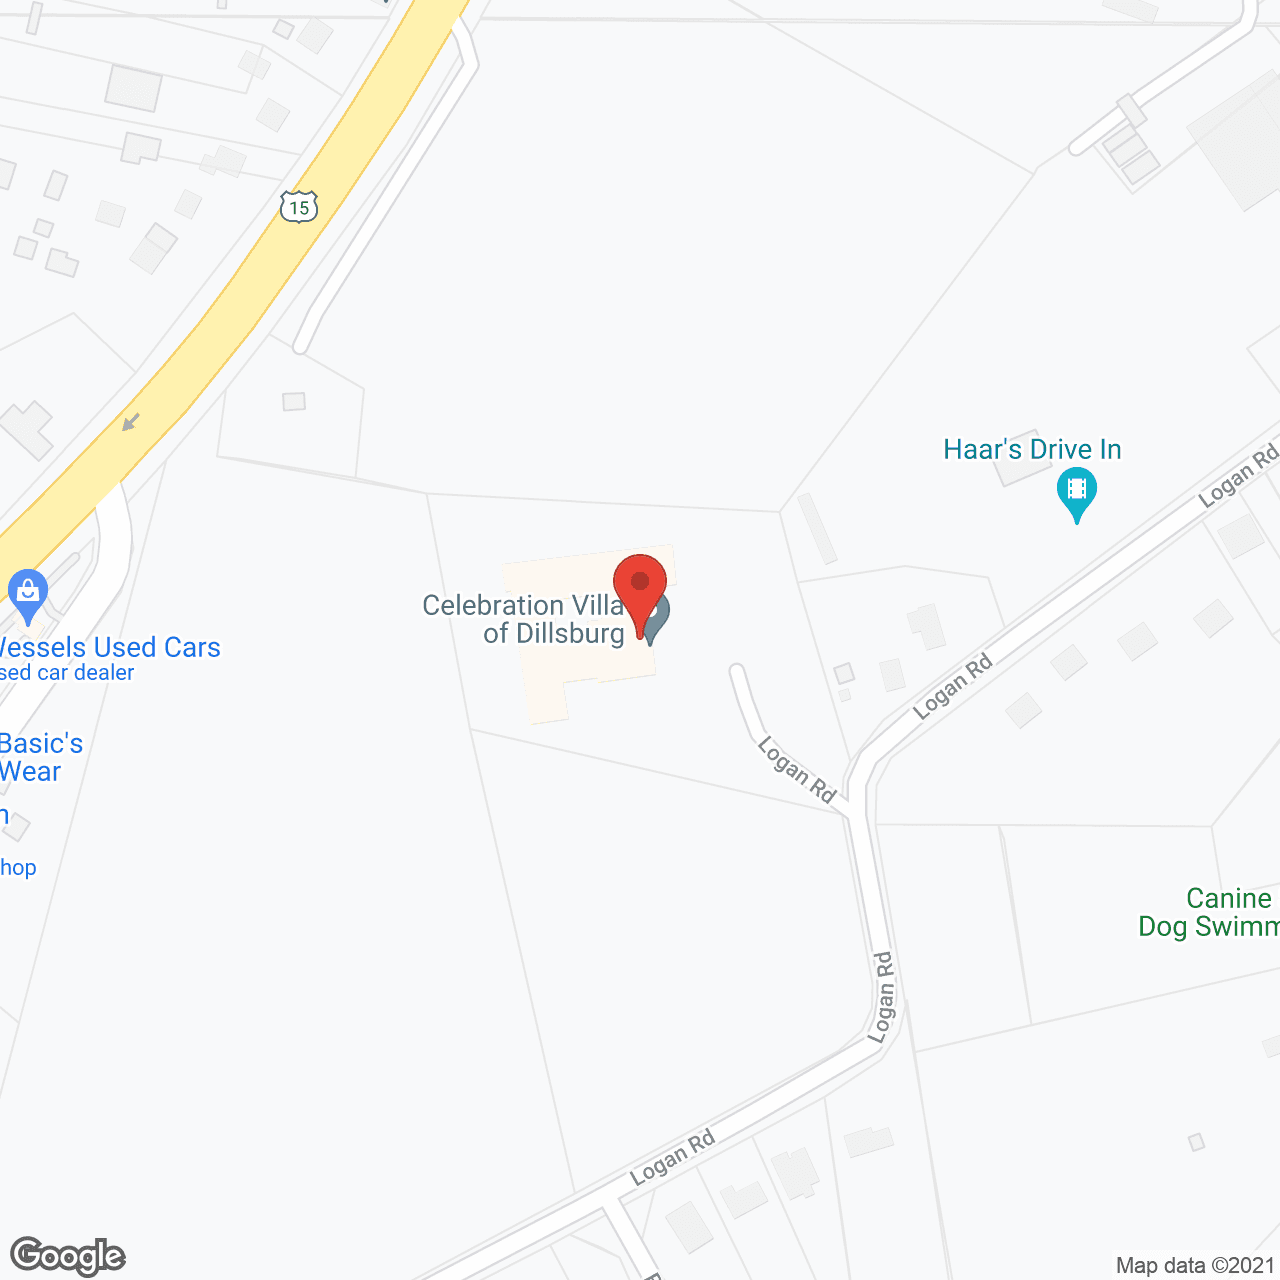 Celebration Villa of Dillsburg in google map